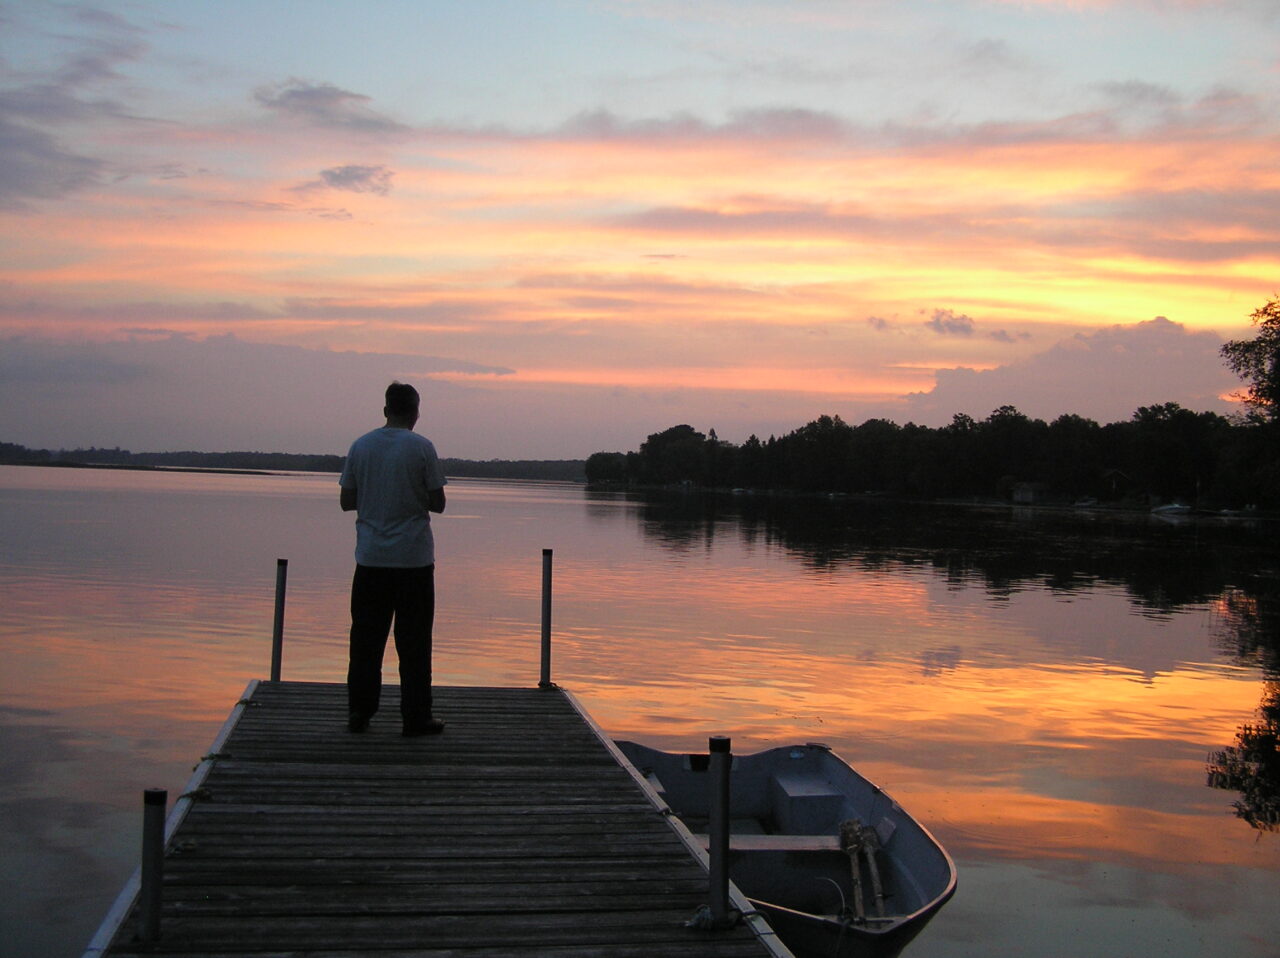 dock at sunrise or sunset